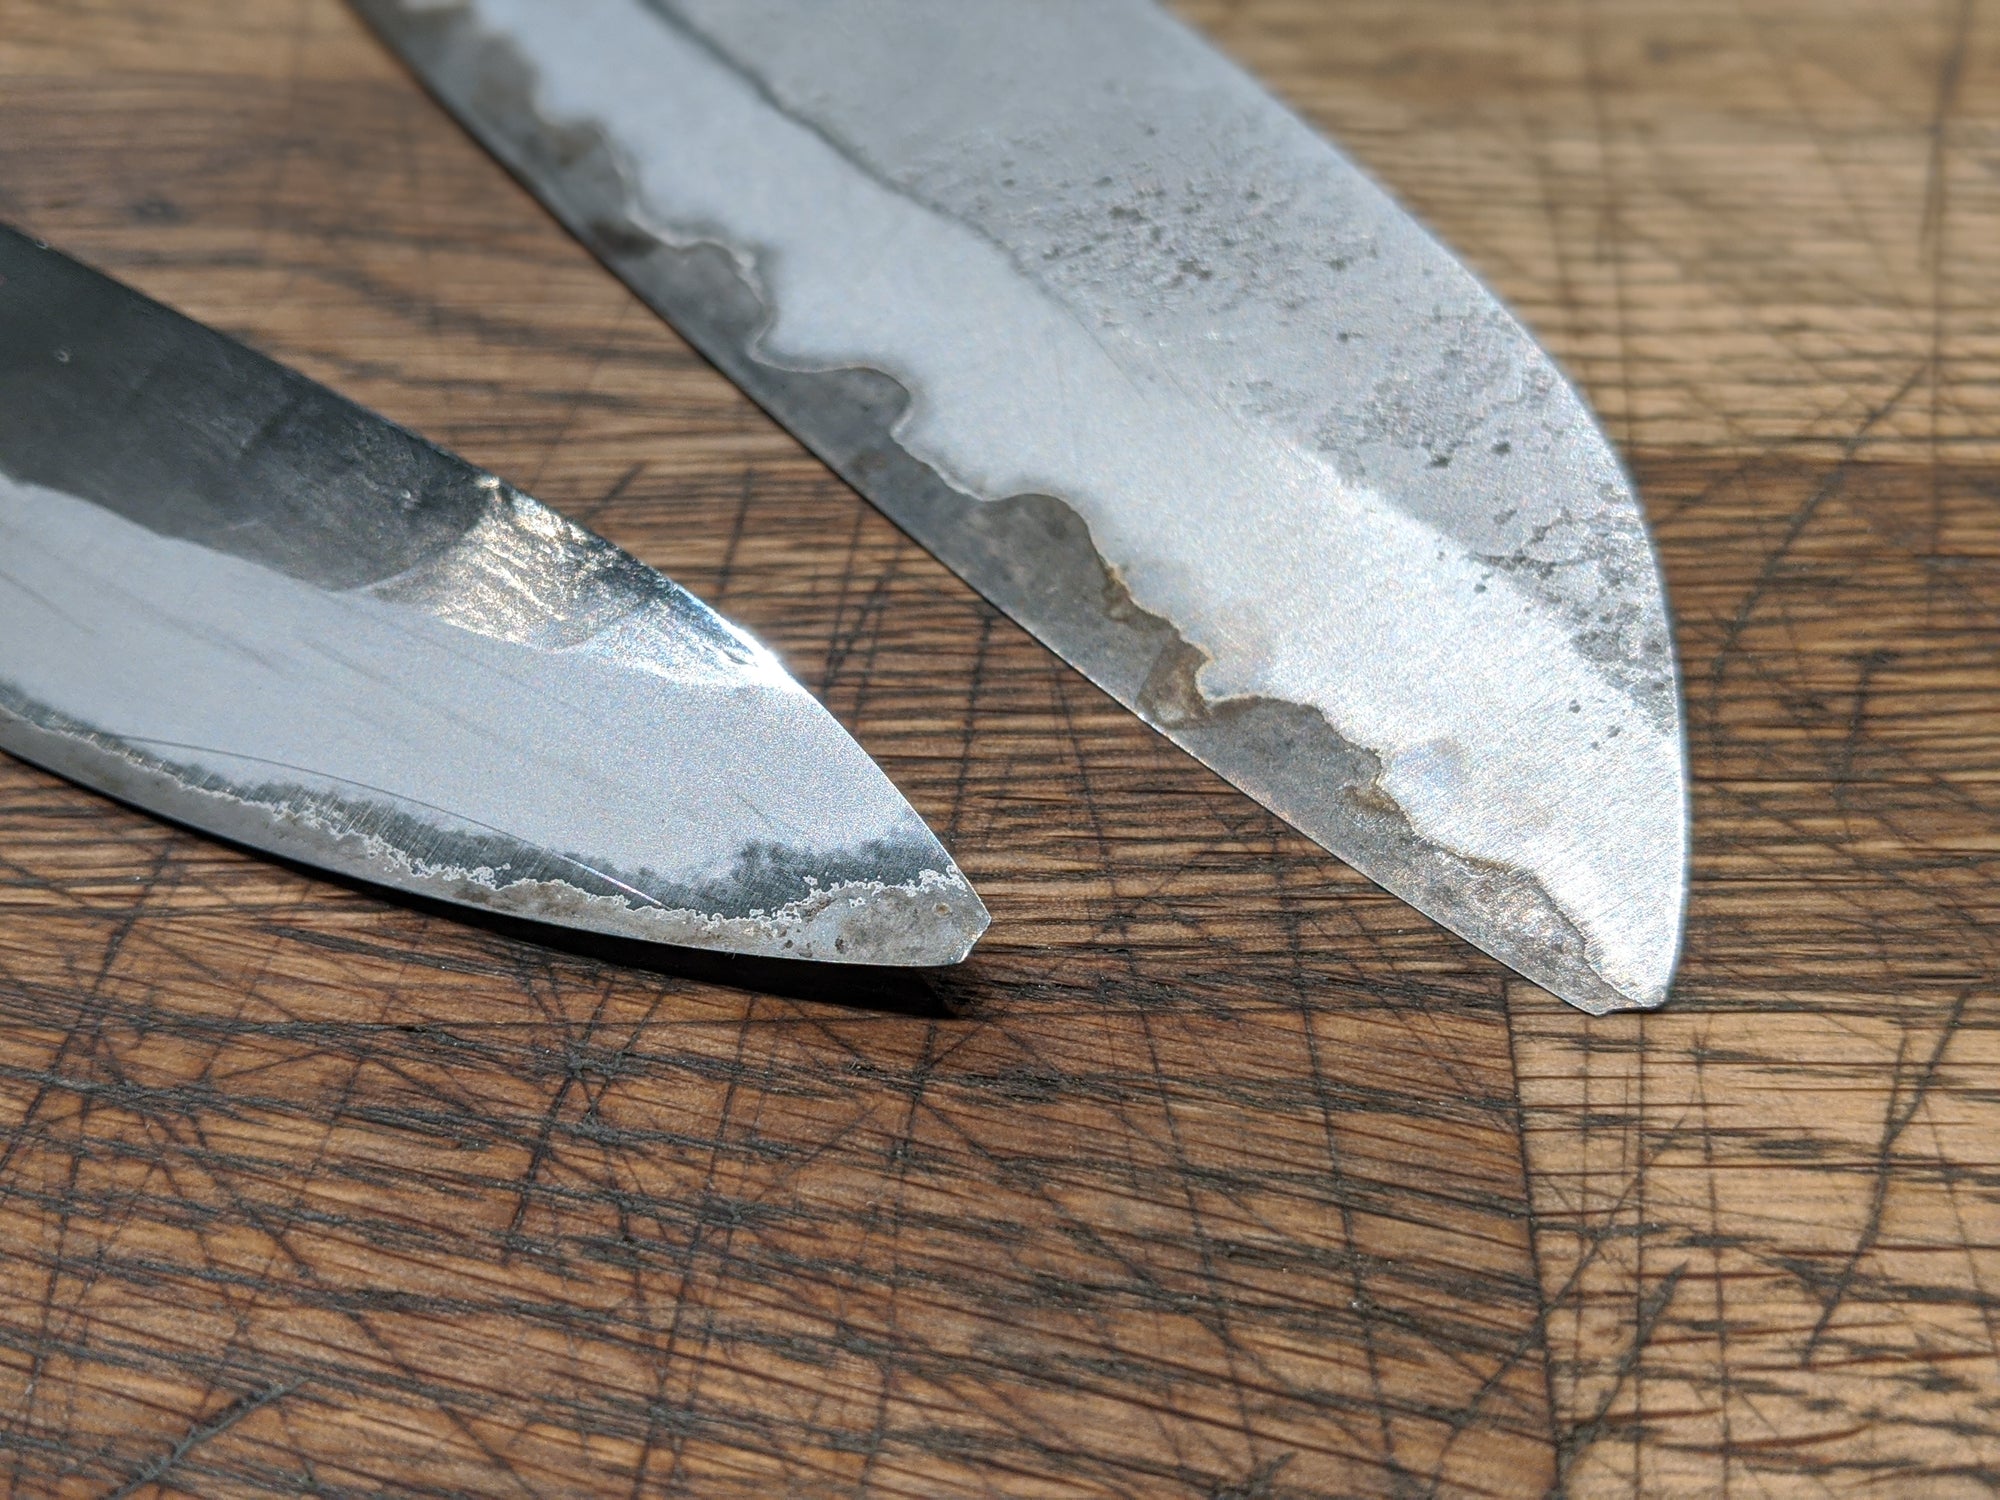 How to Fix Your Broken Knife Tip